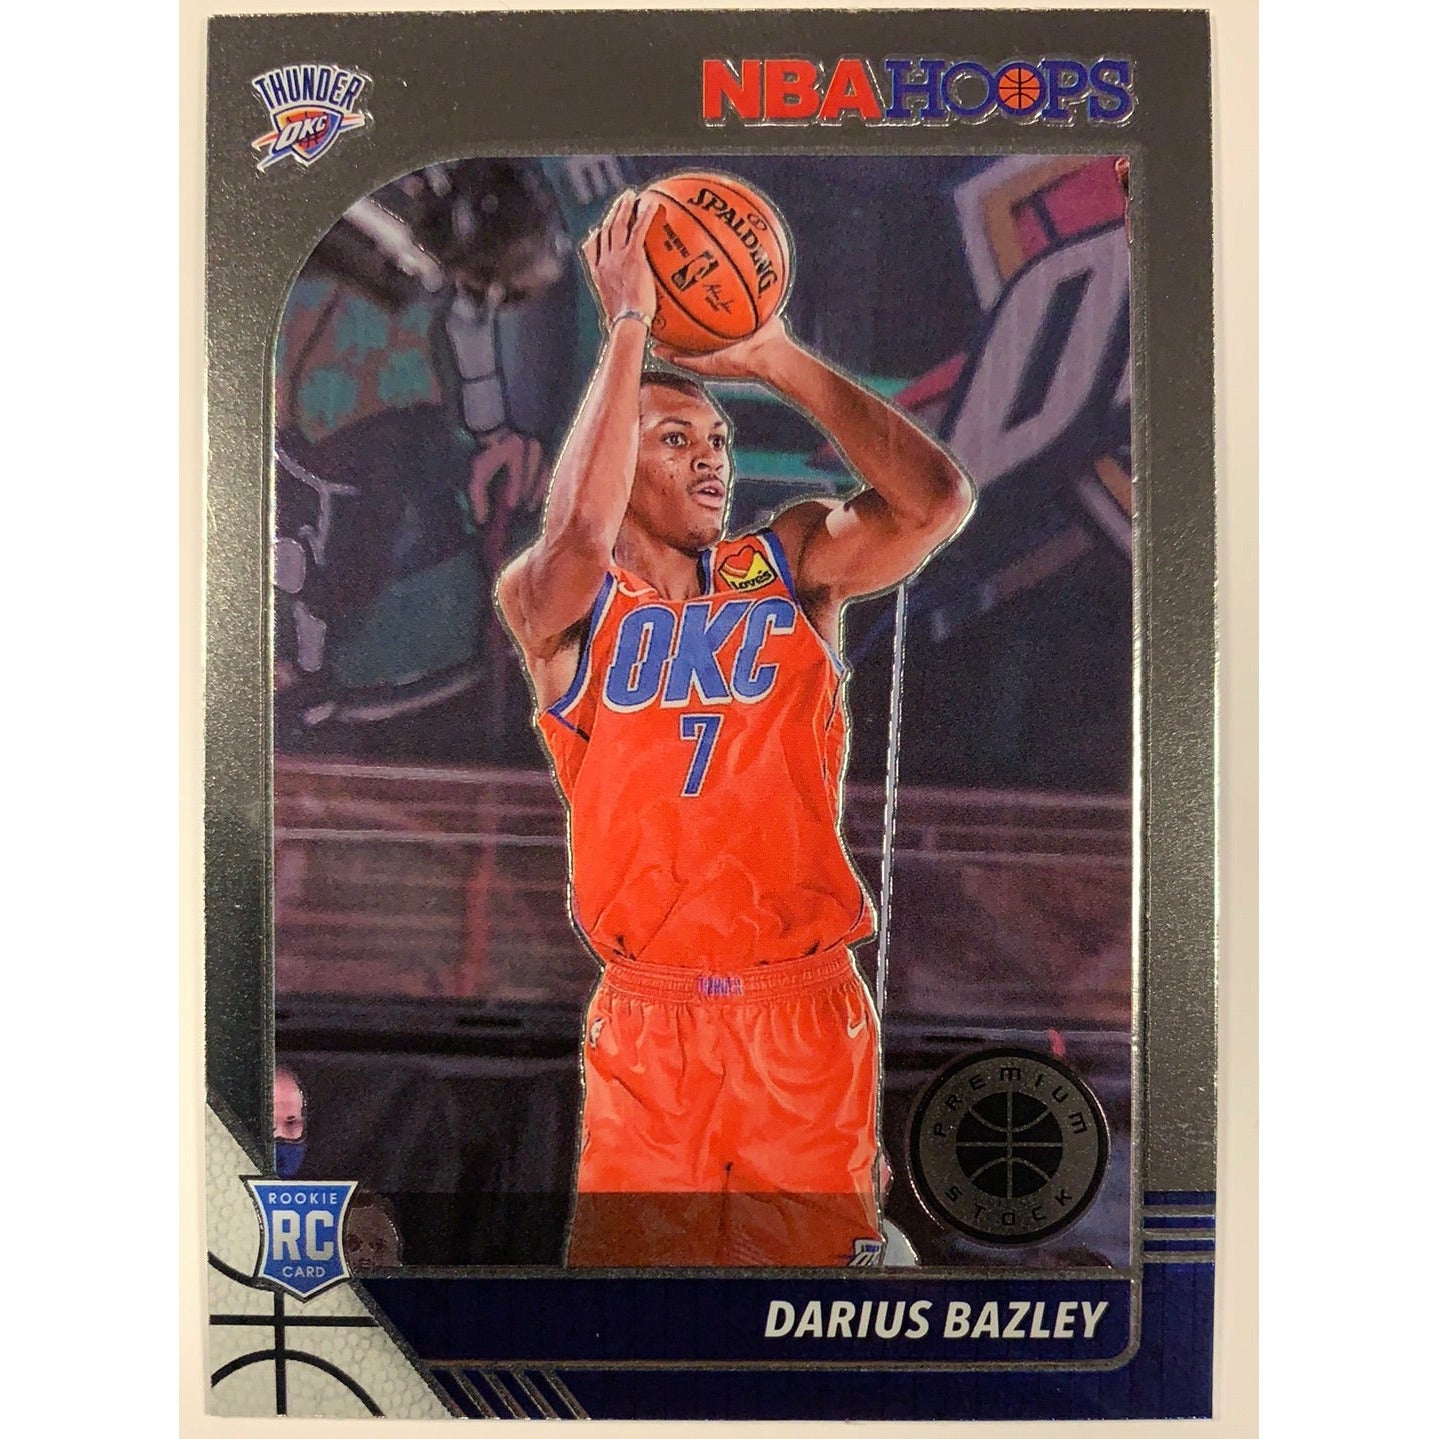  2019-20 Hoops Premium Stock Darius Bazley RC  Local Legends Cards & Collectibles